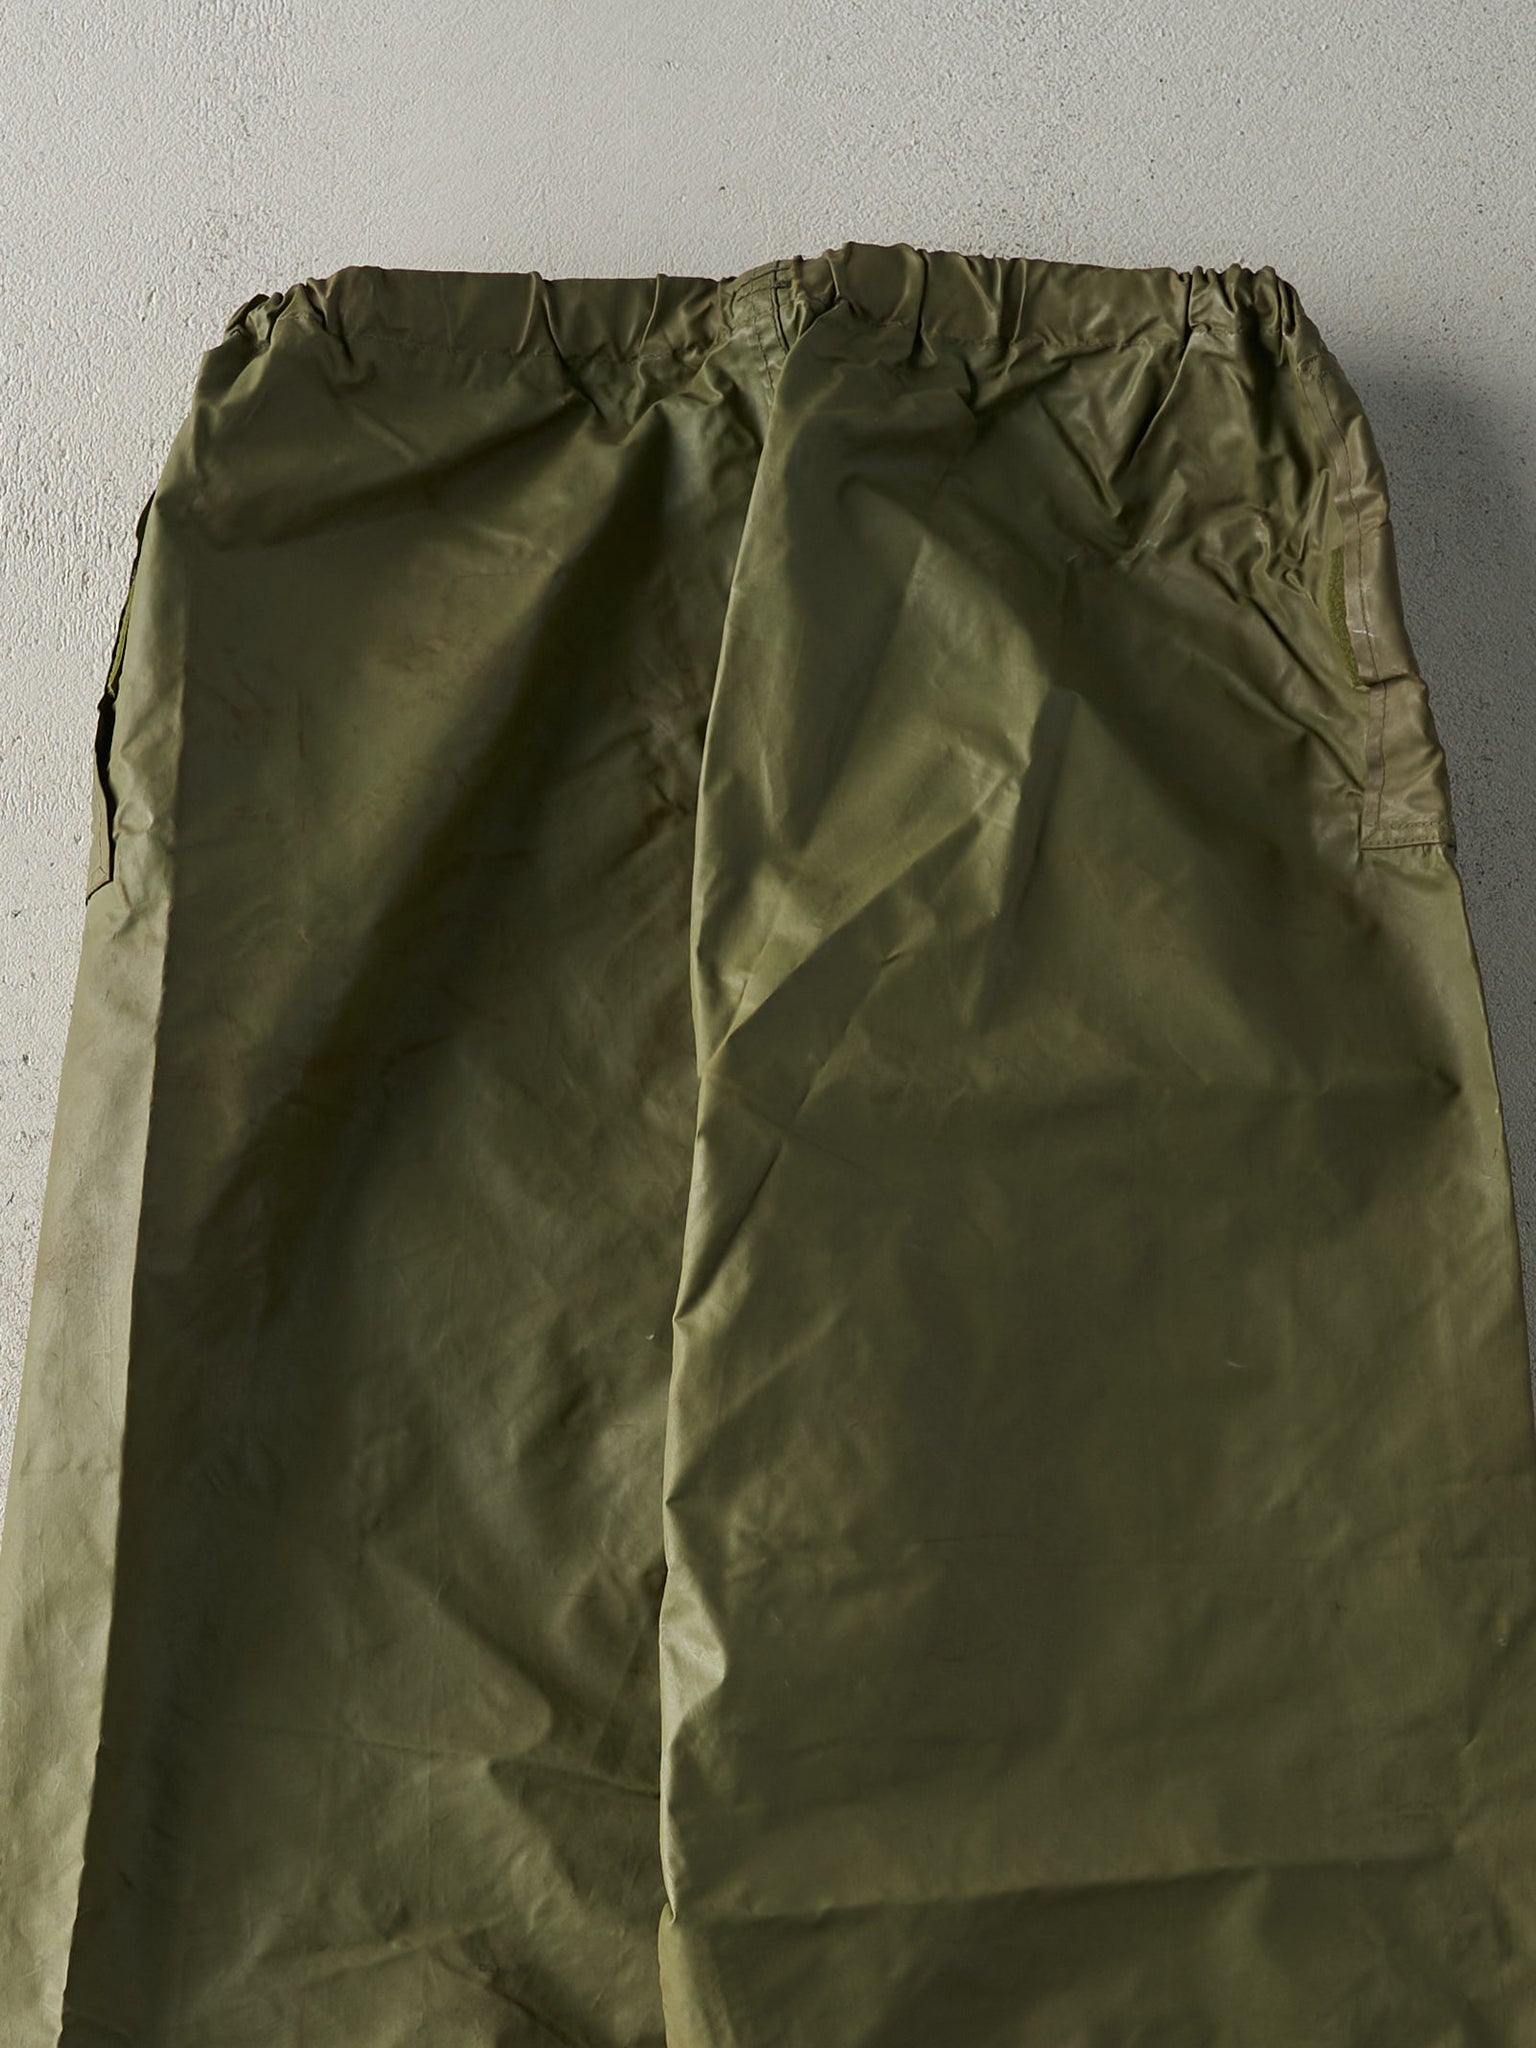 Vintage 96' Army Green Military Rain Pants (32x28)